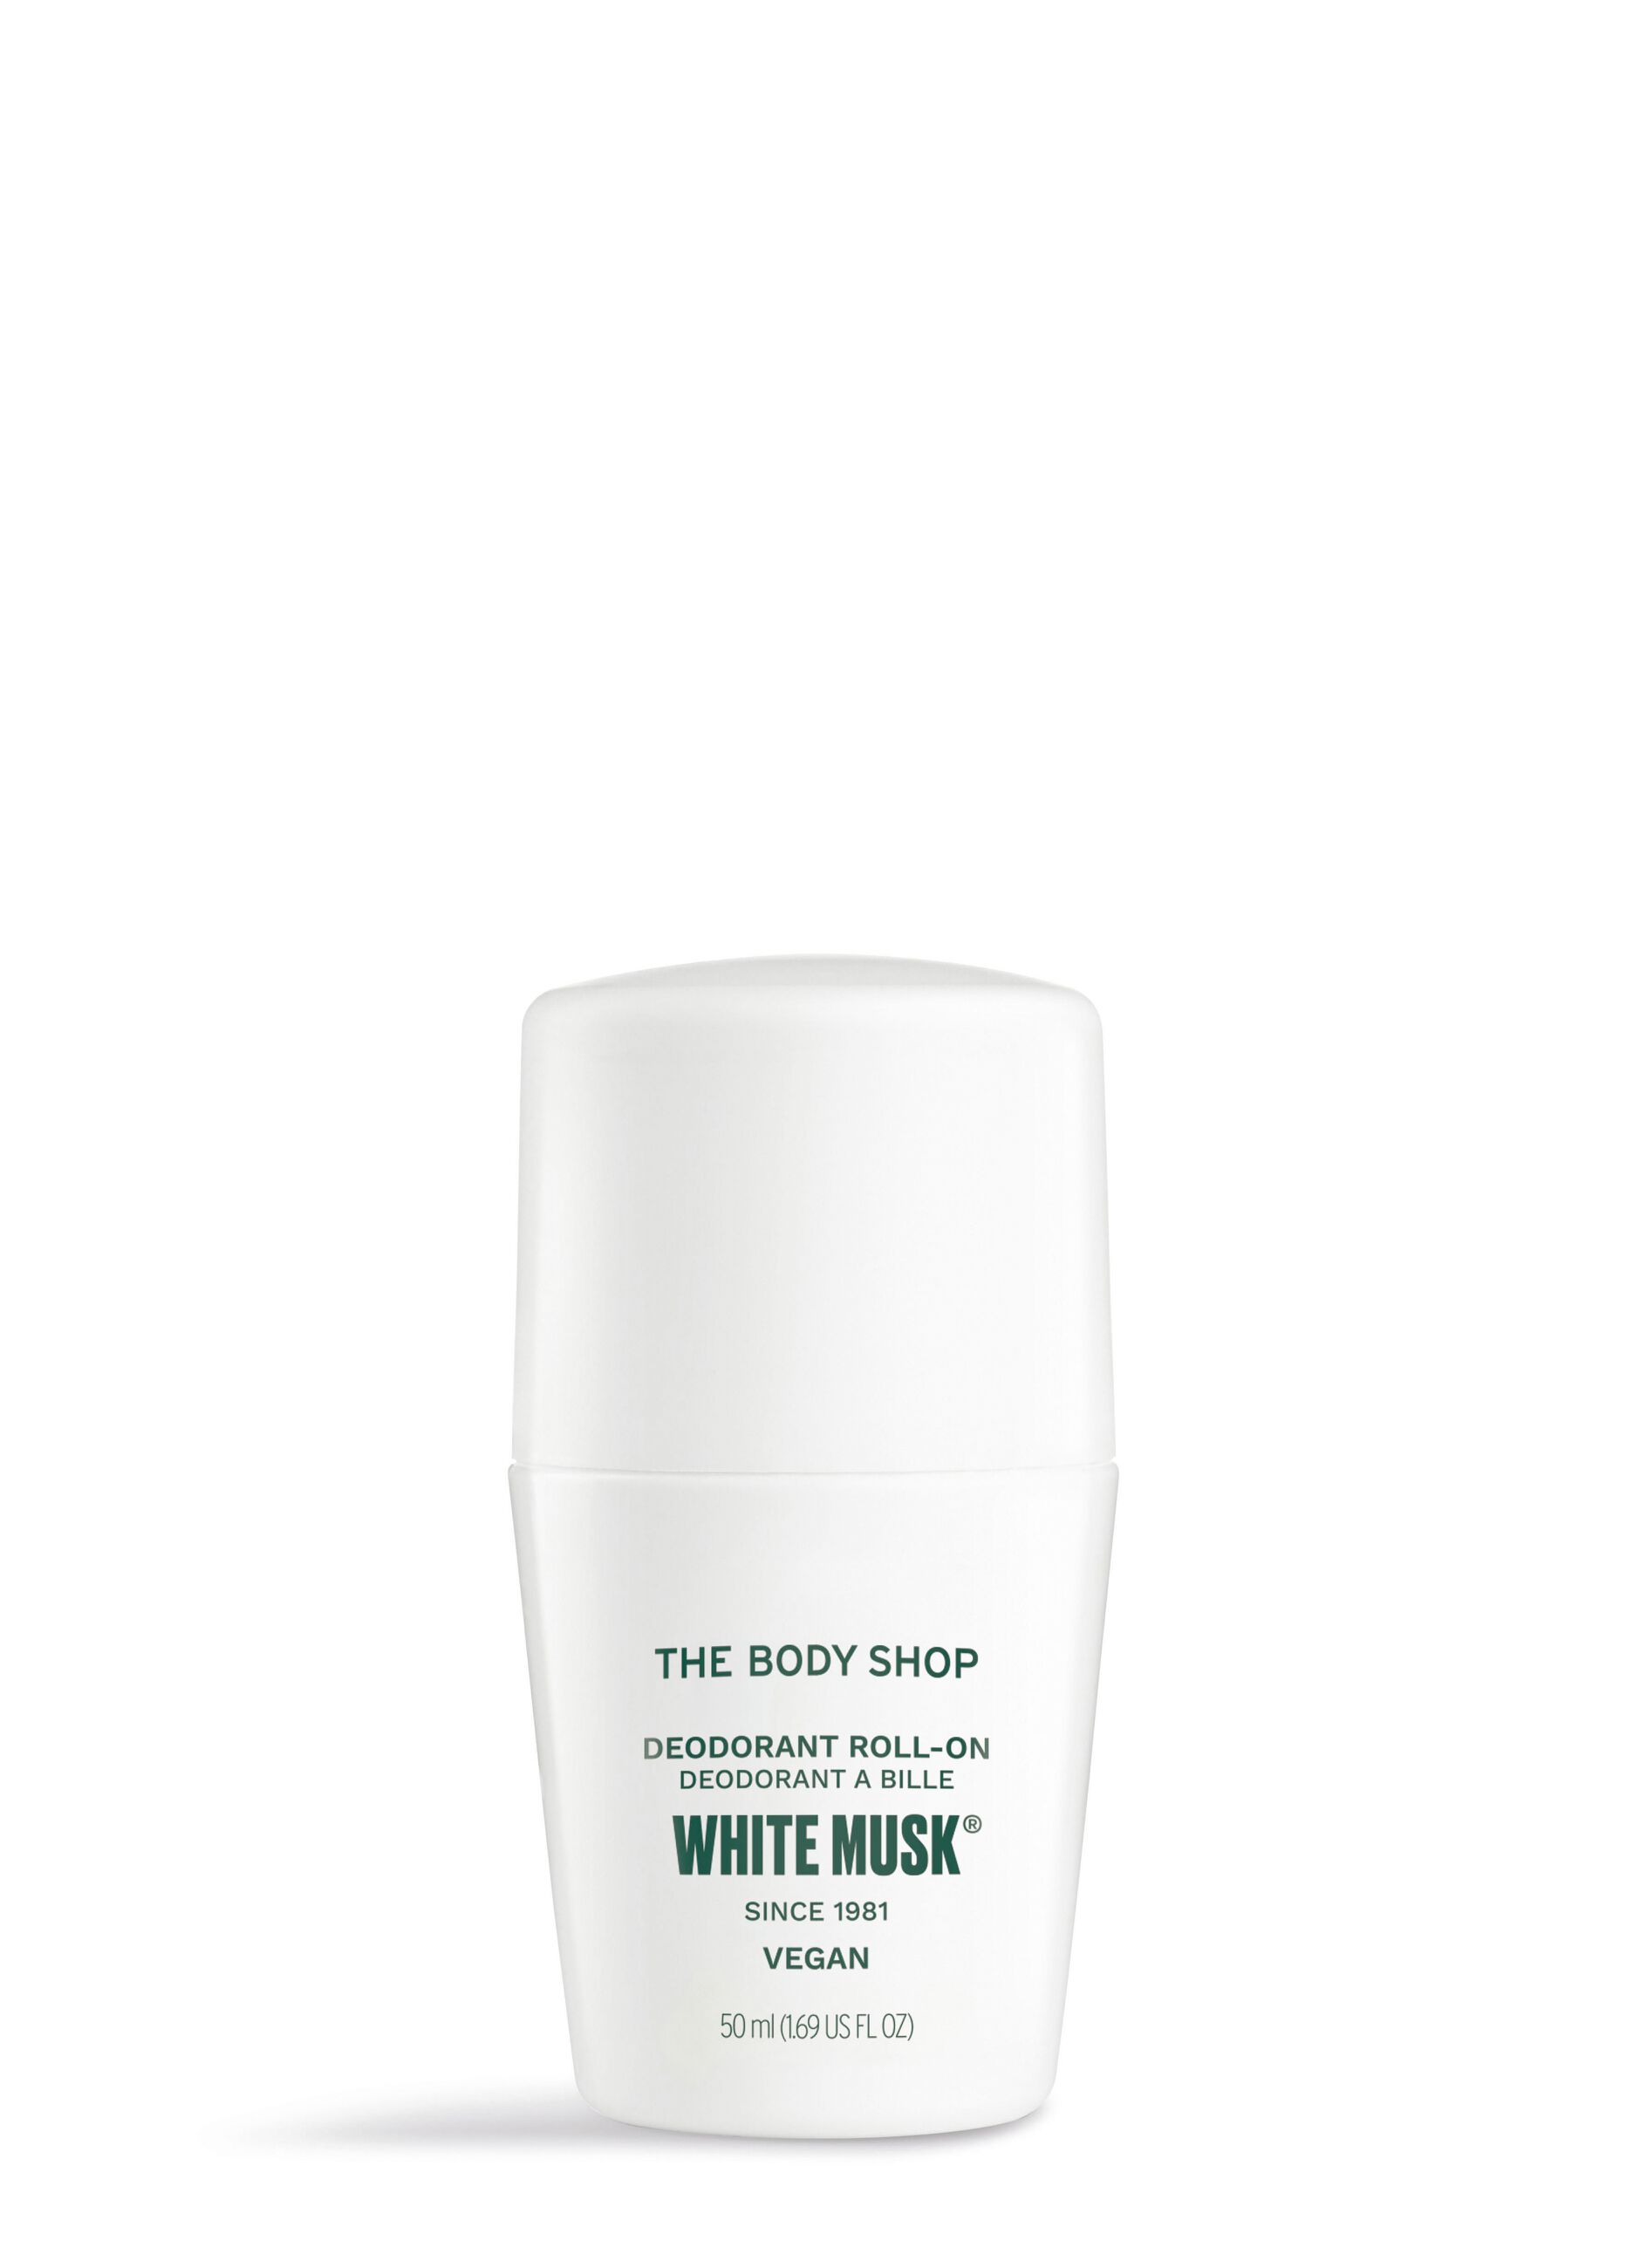 The Body Shop White Musk® deodorant